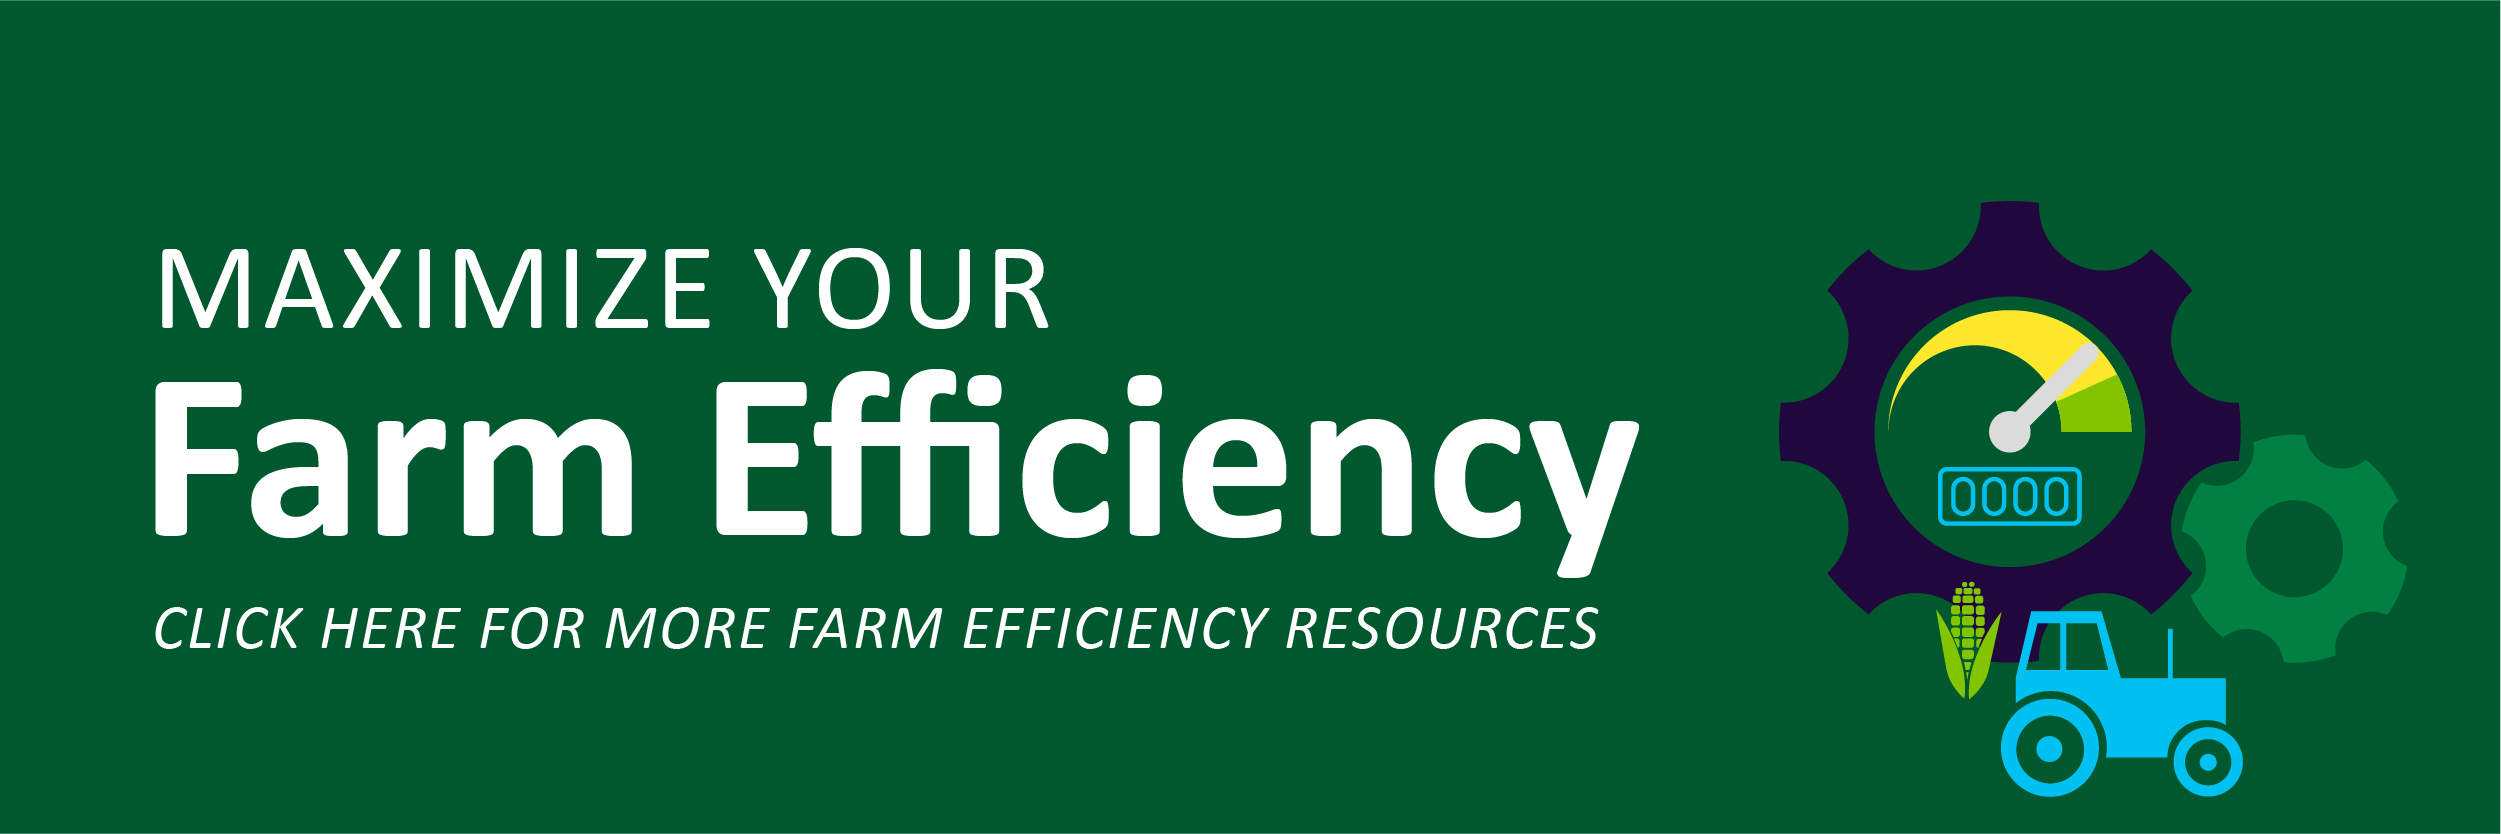 farm efficiency